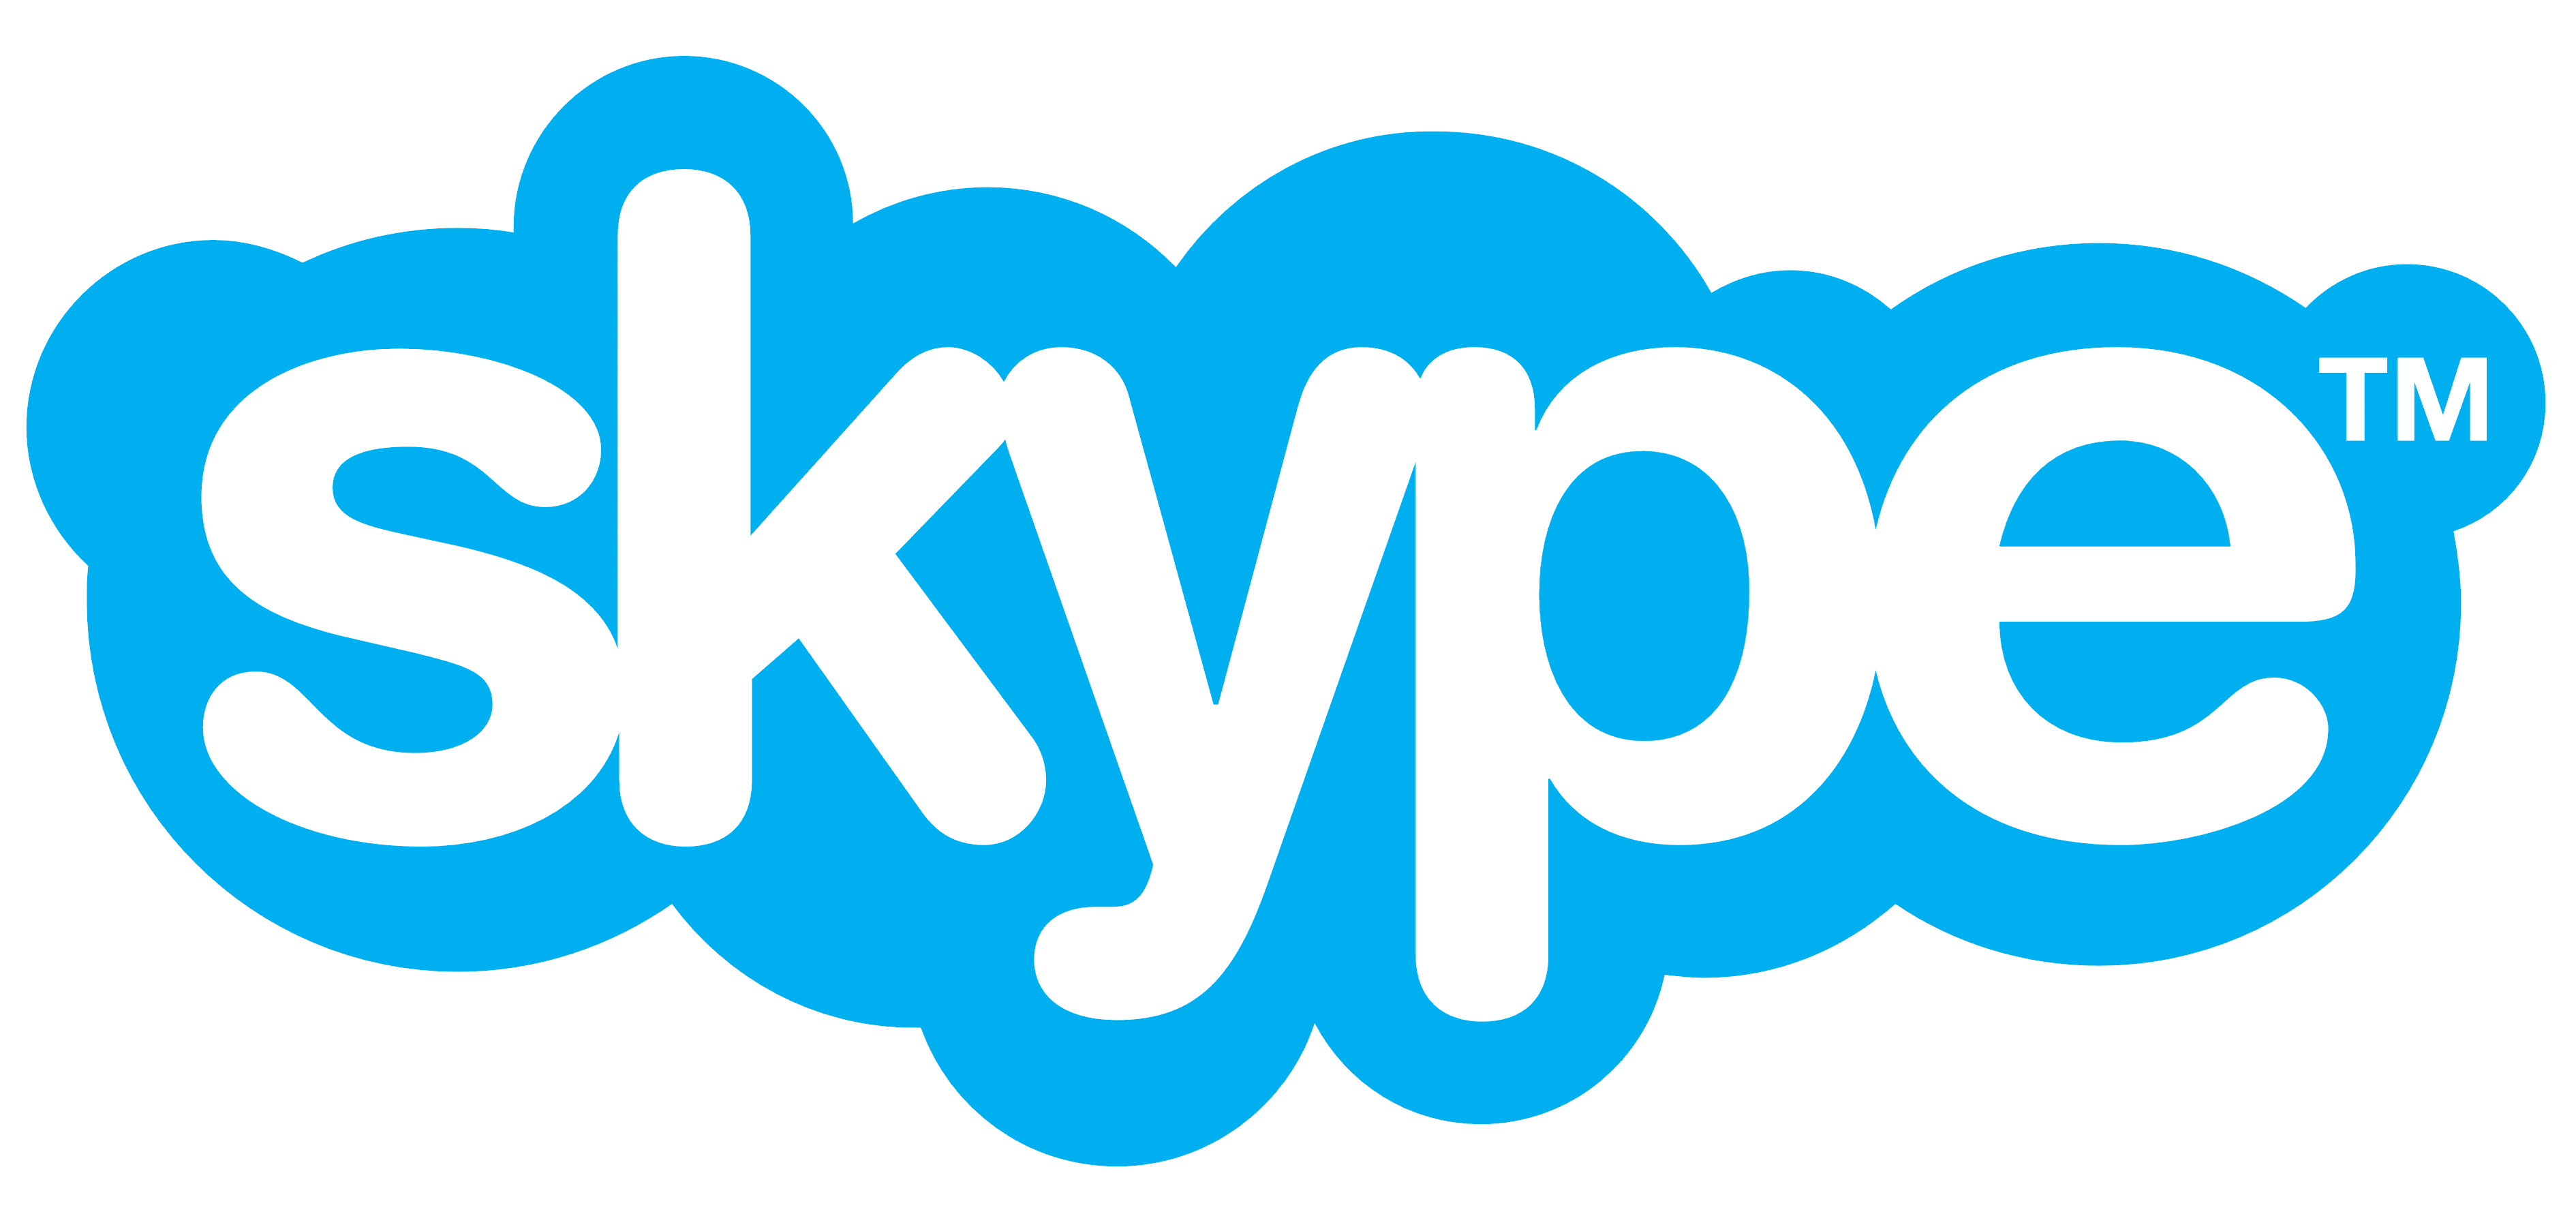 Skype logo, logotype